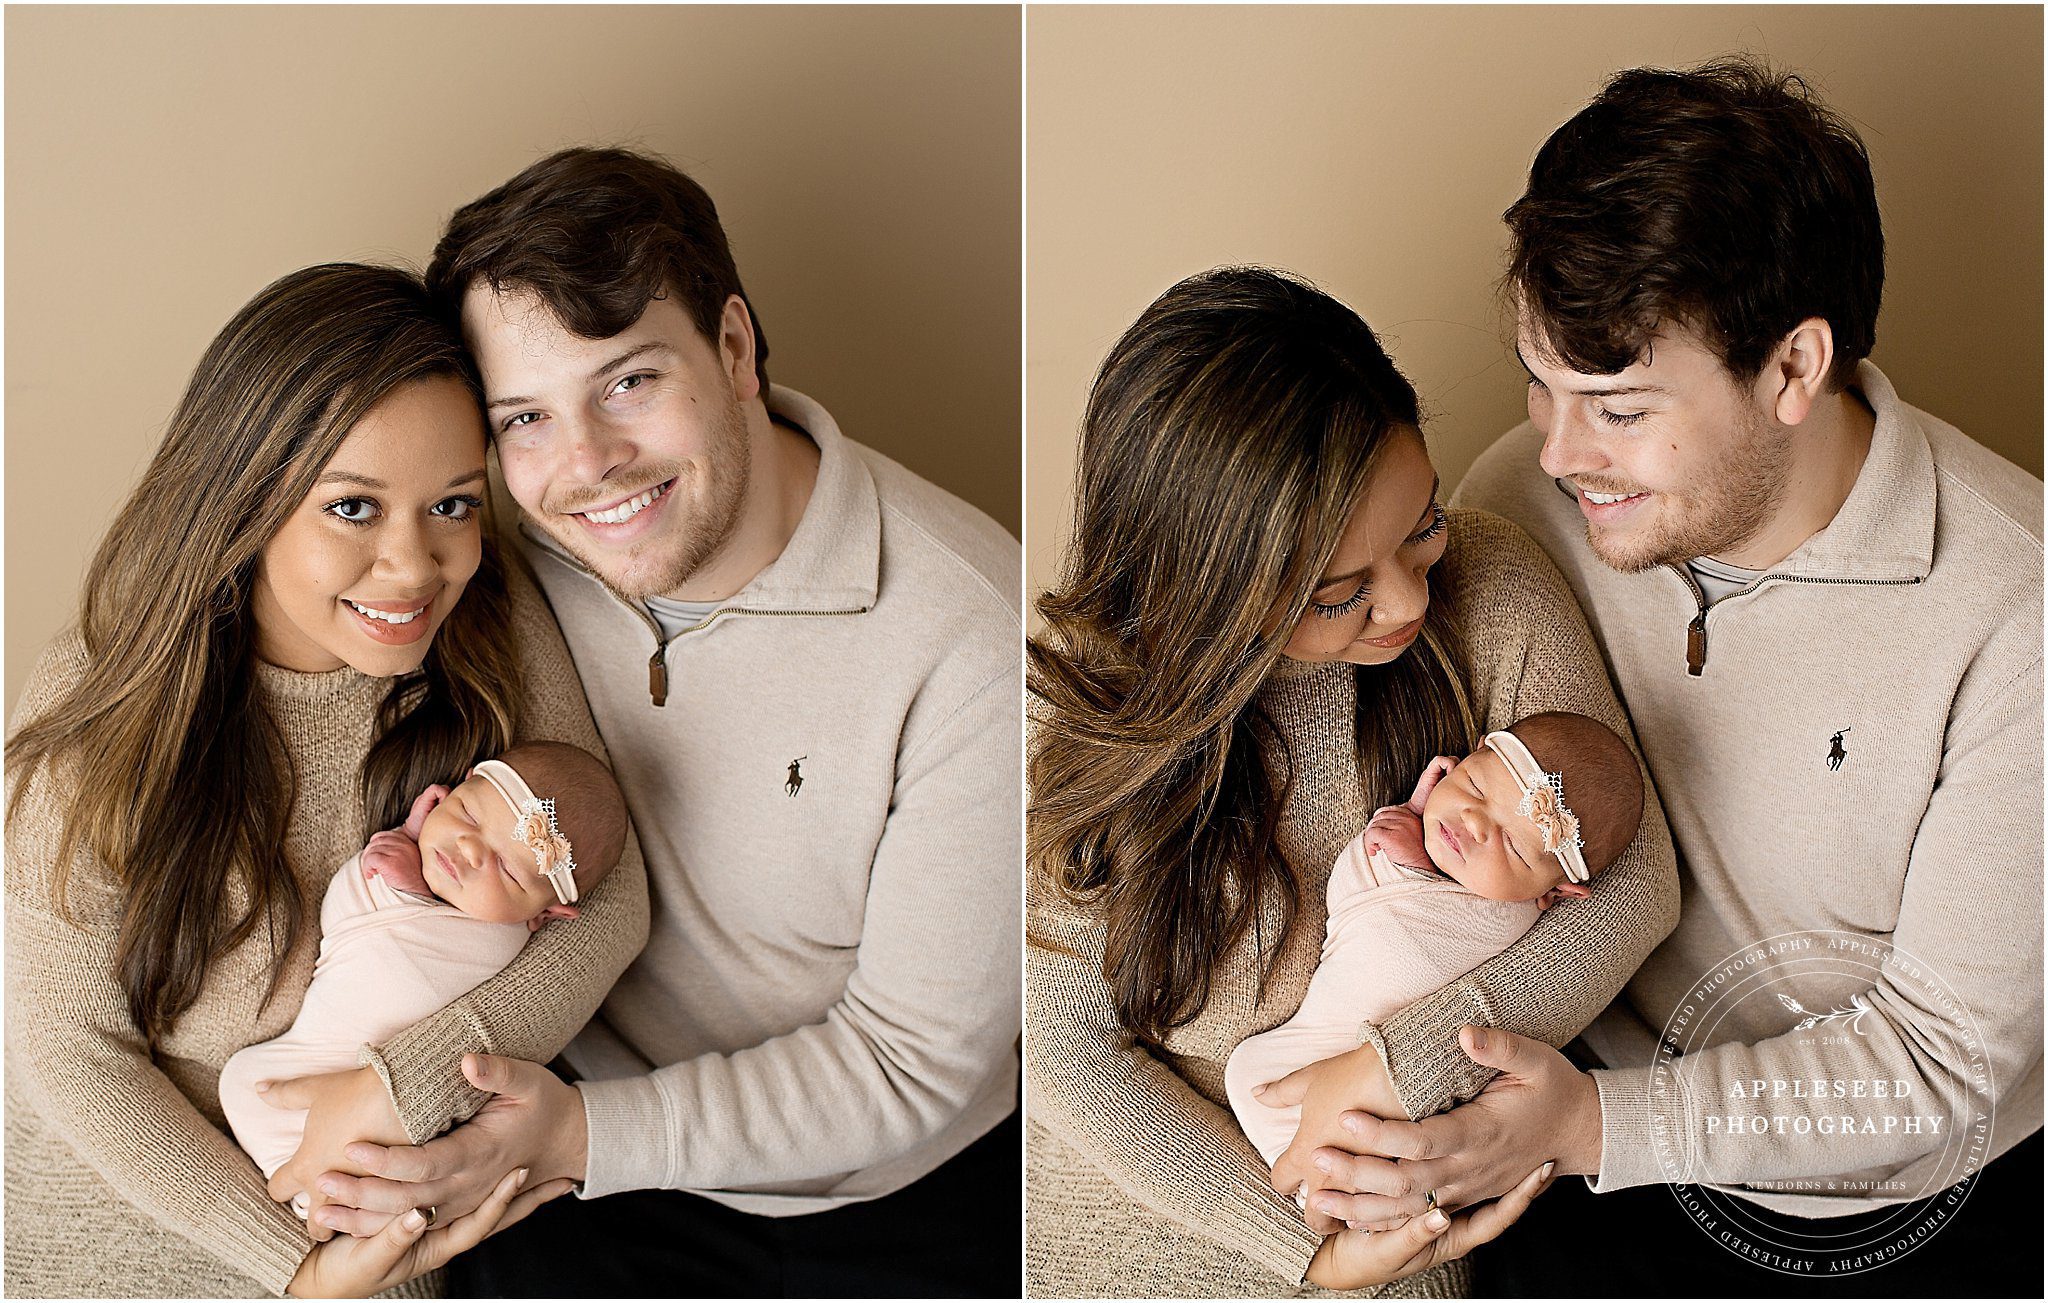 Amelia | Atlanta Newborn Photographer | Appleseed Photography